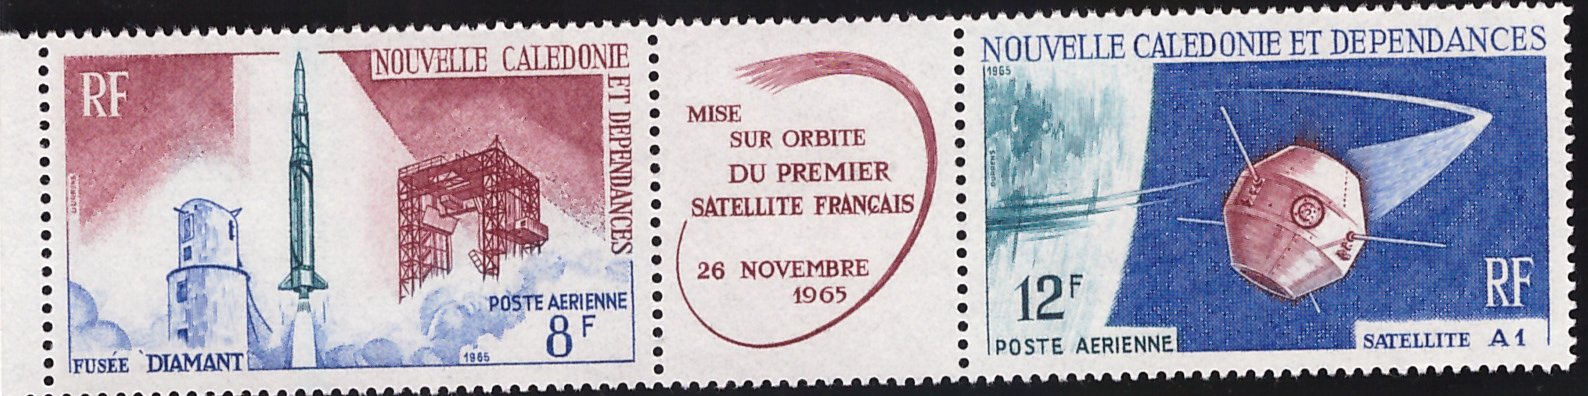 New Caledonia 1966 Airmail - Launching of 1st French Satellite